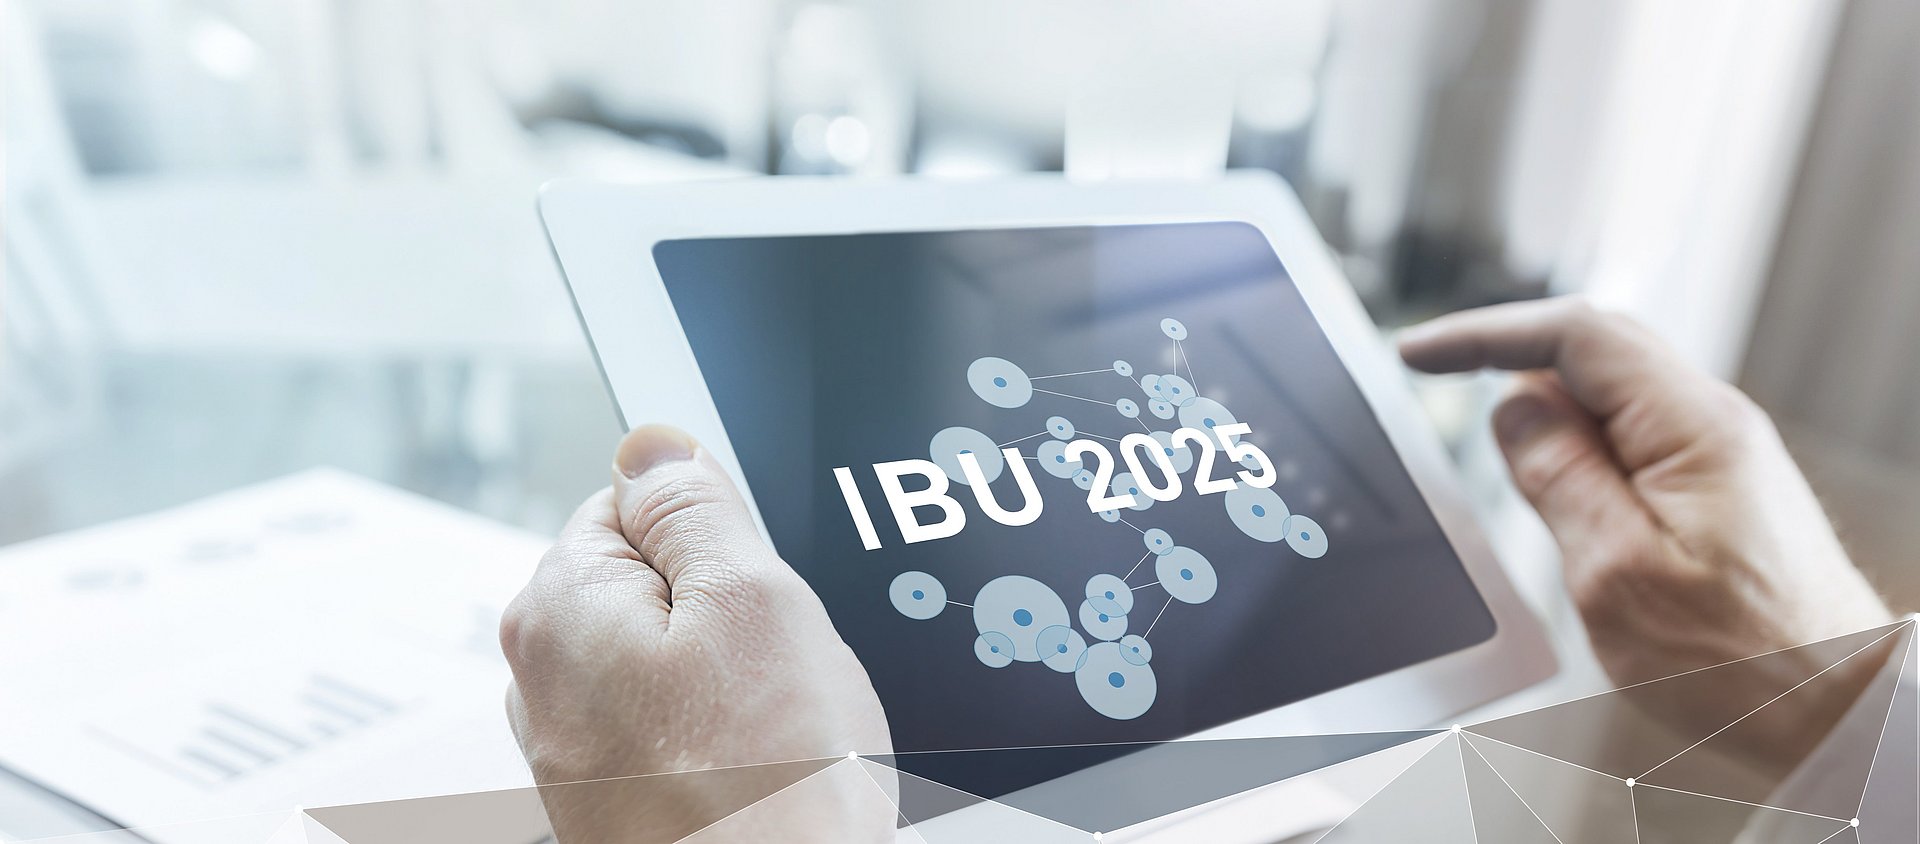 IBU-tec plan for 2020 for investor relations